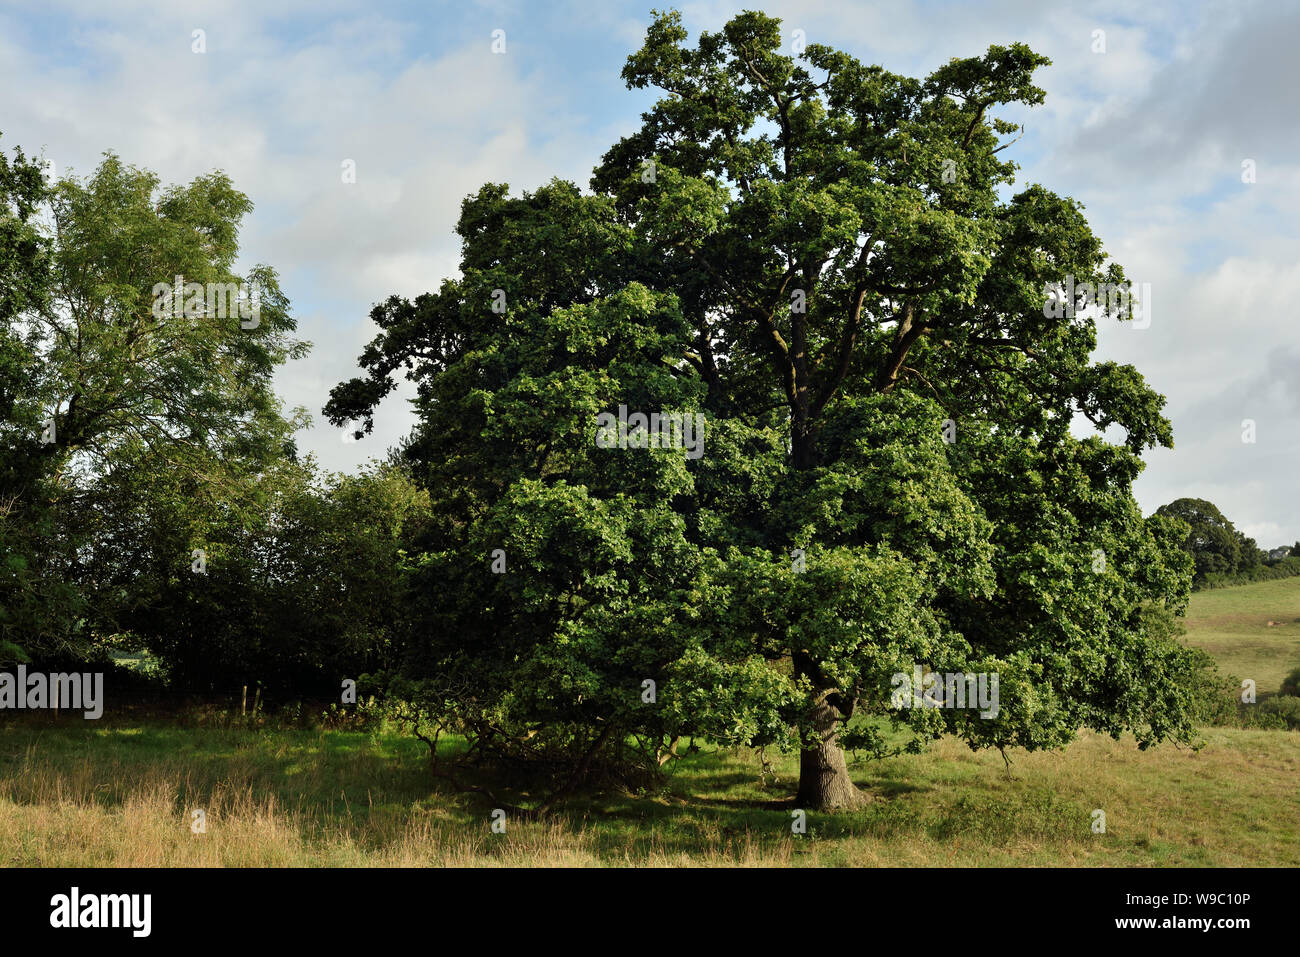 A mature Oak tree in a field in Dorset, England Stock Photo